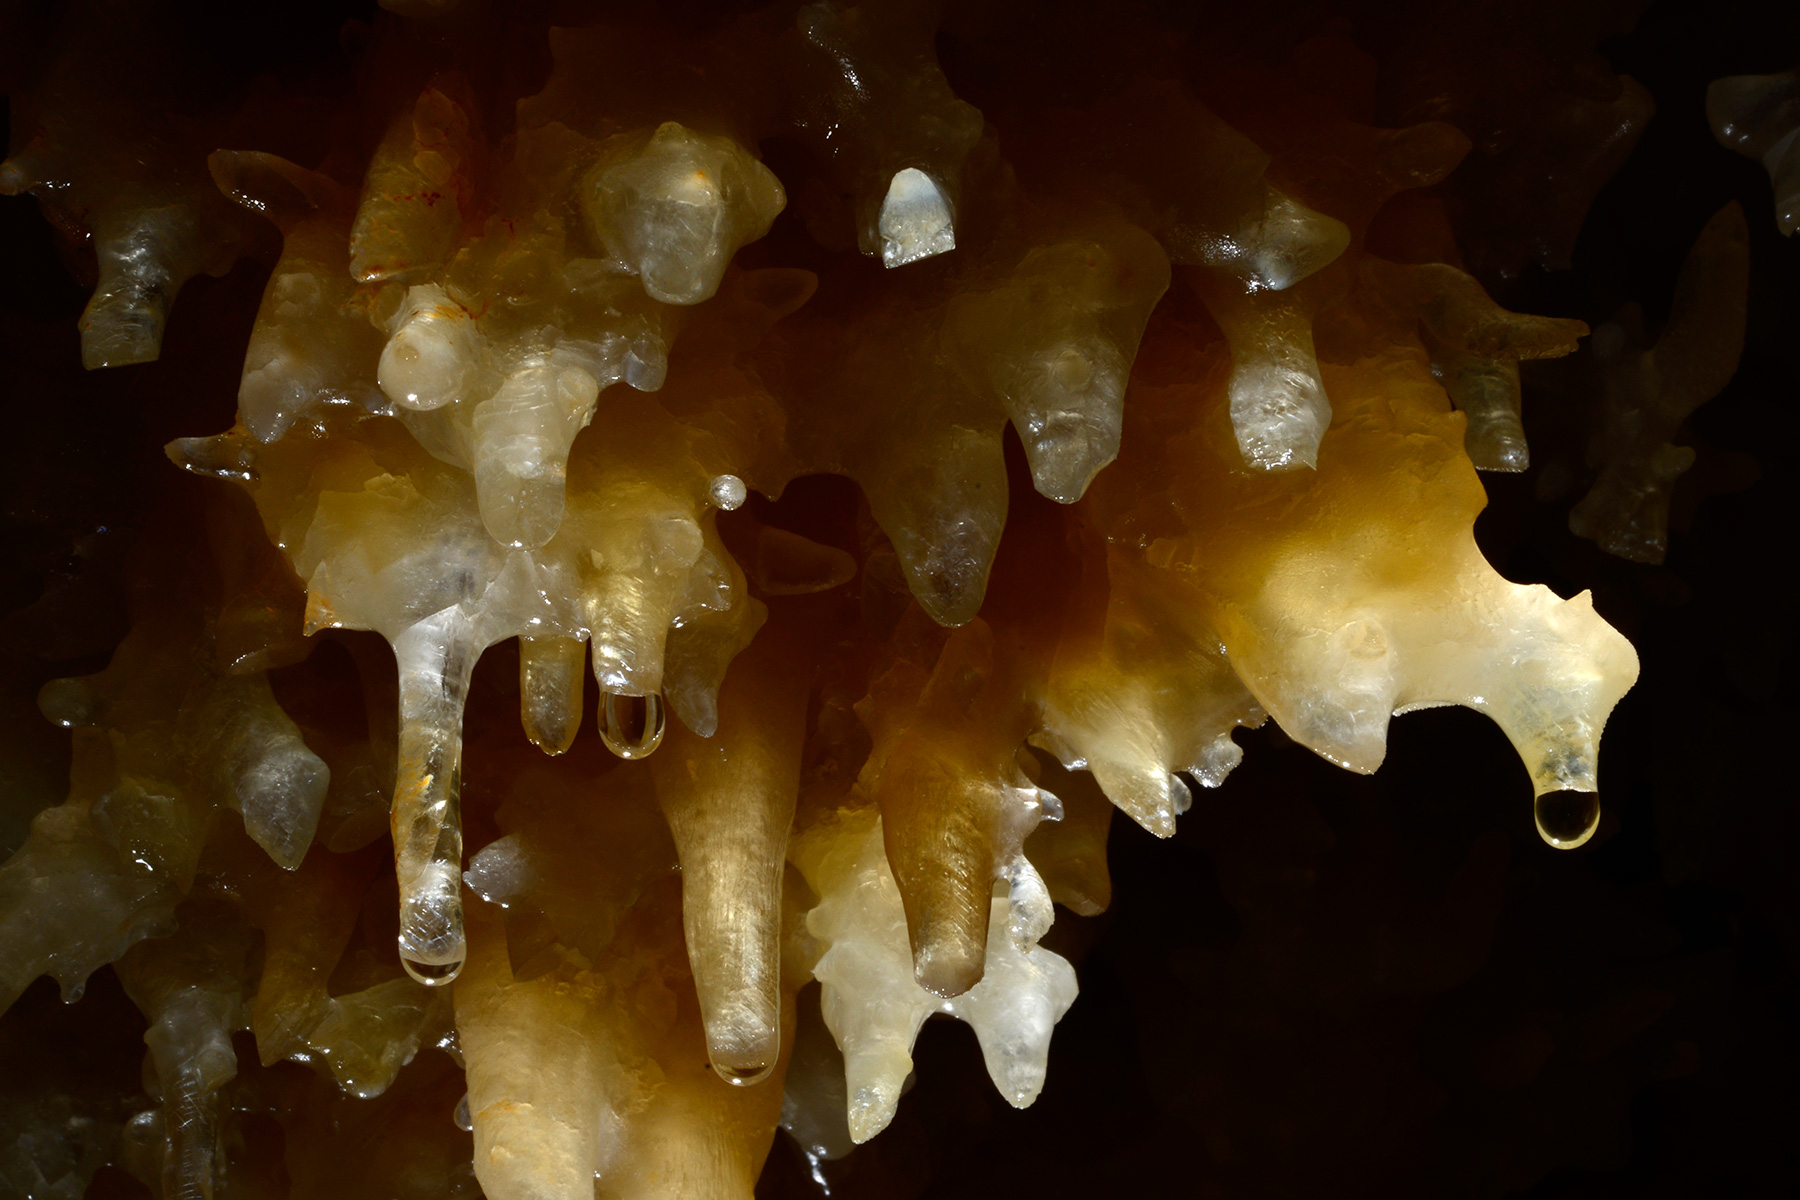 Grotta Impossibile (région de Trieste, Italie) - Cristaux de calcite jaune